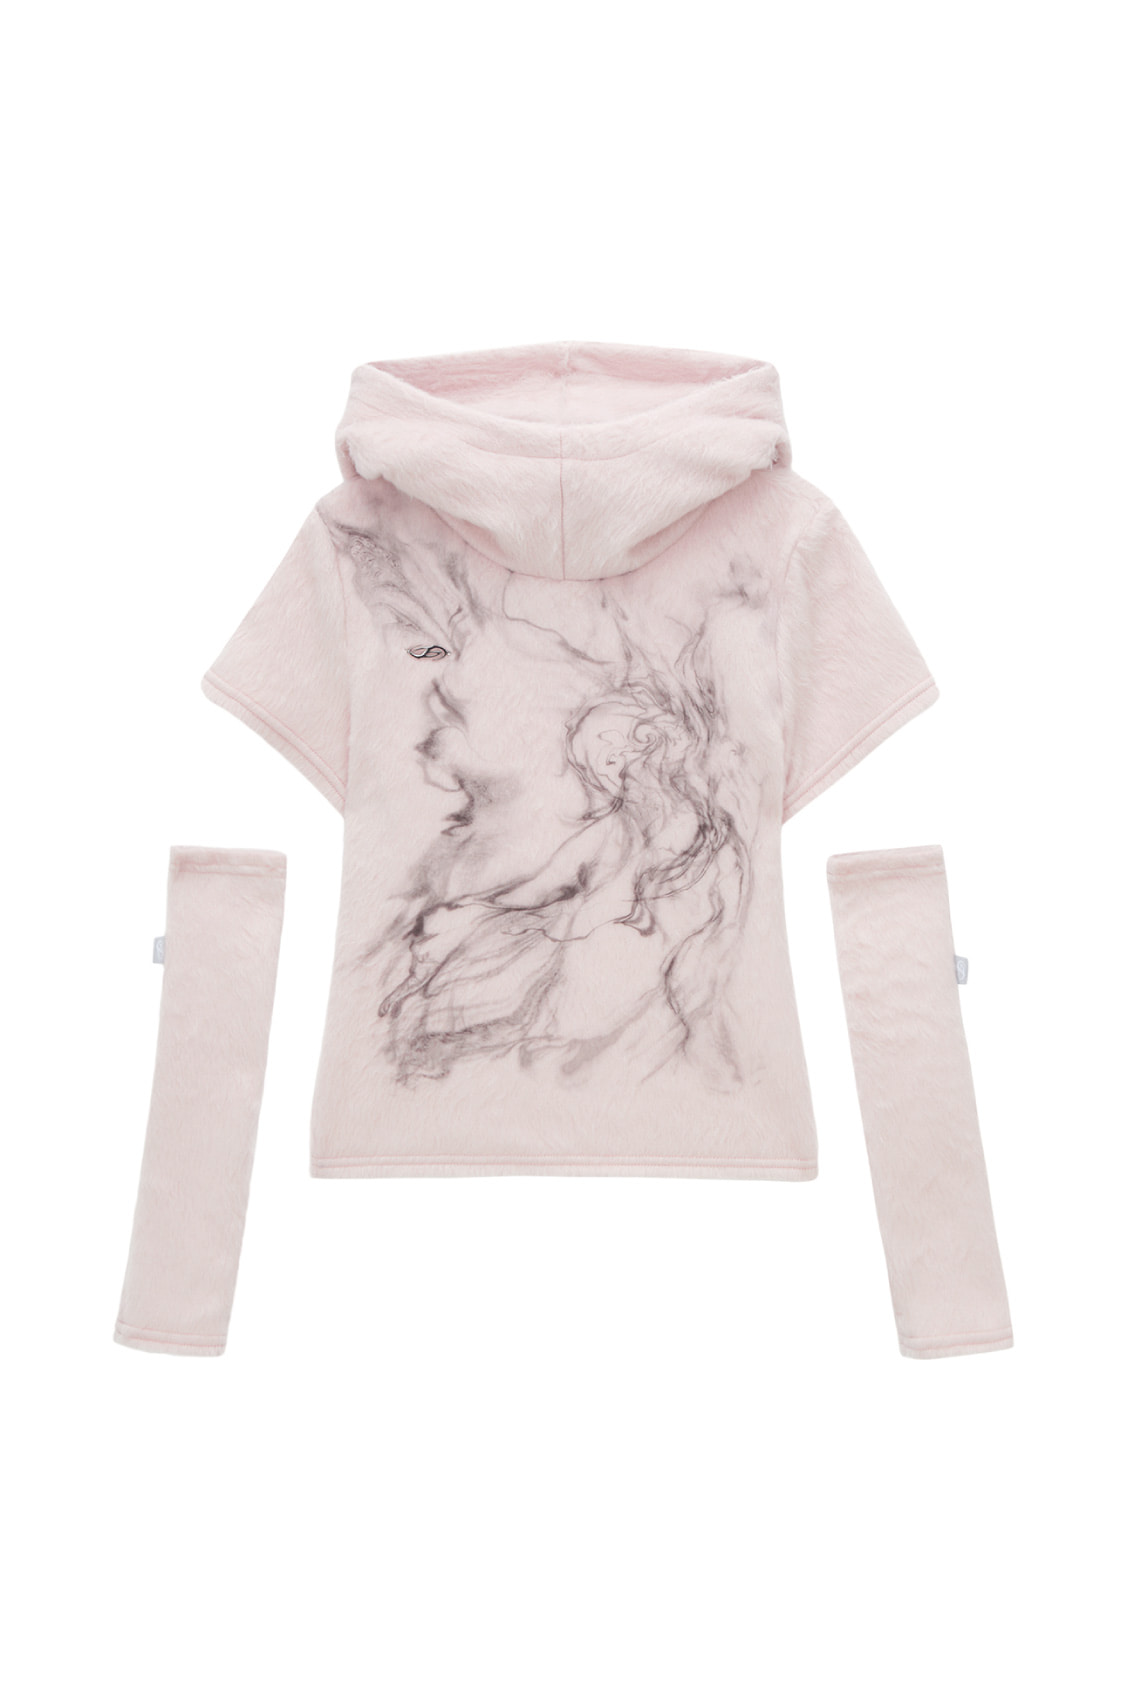 Furry hoodie set-up (Baby pink) *hugyourskin.kr exclusive color